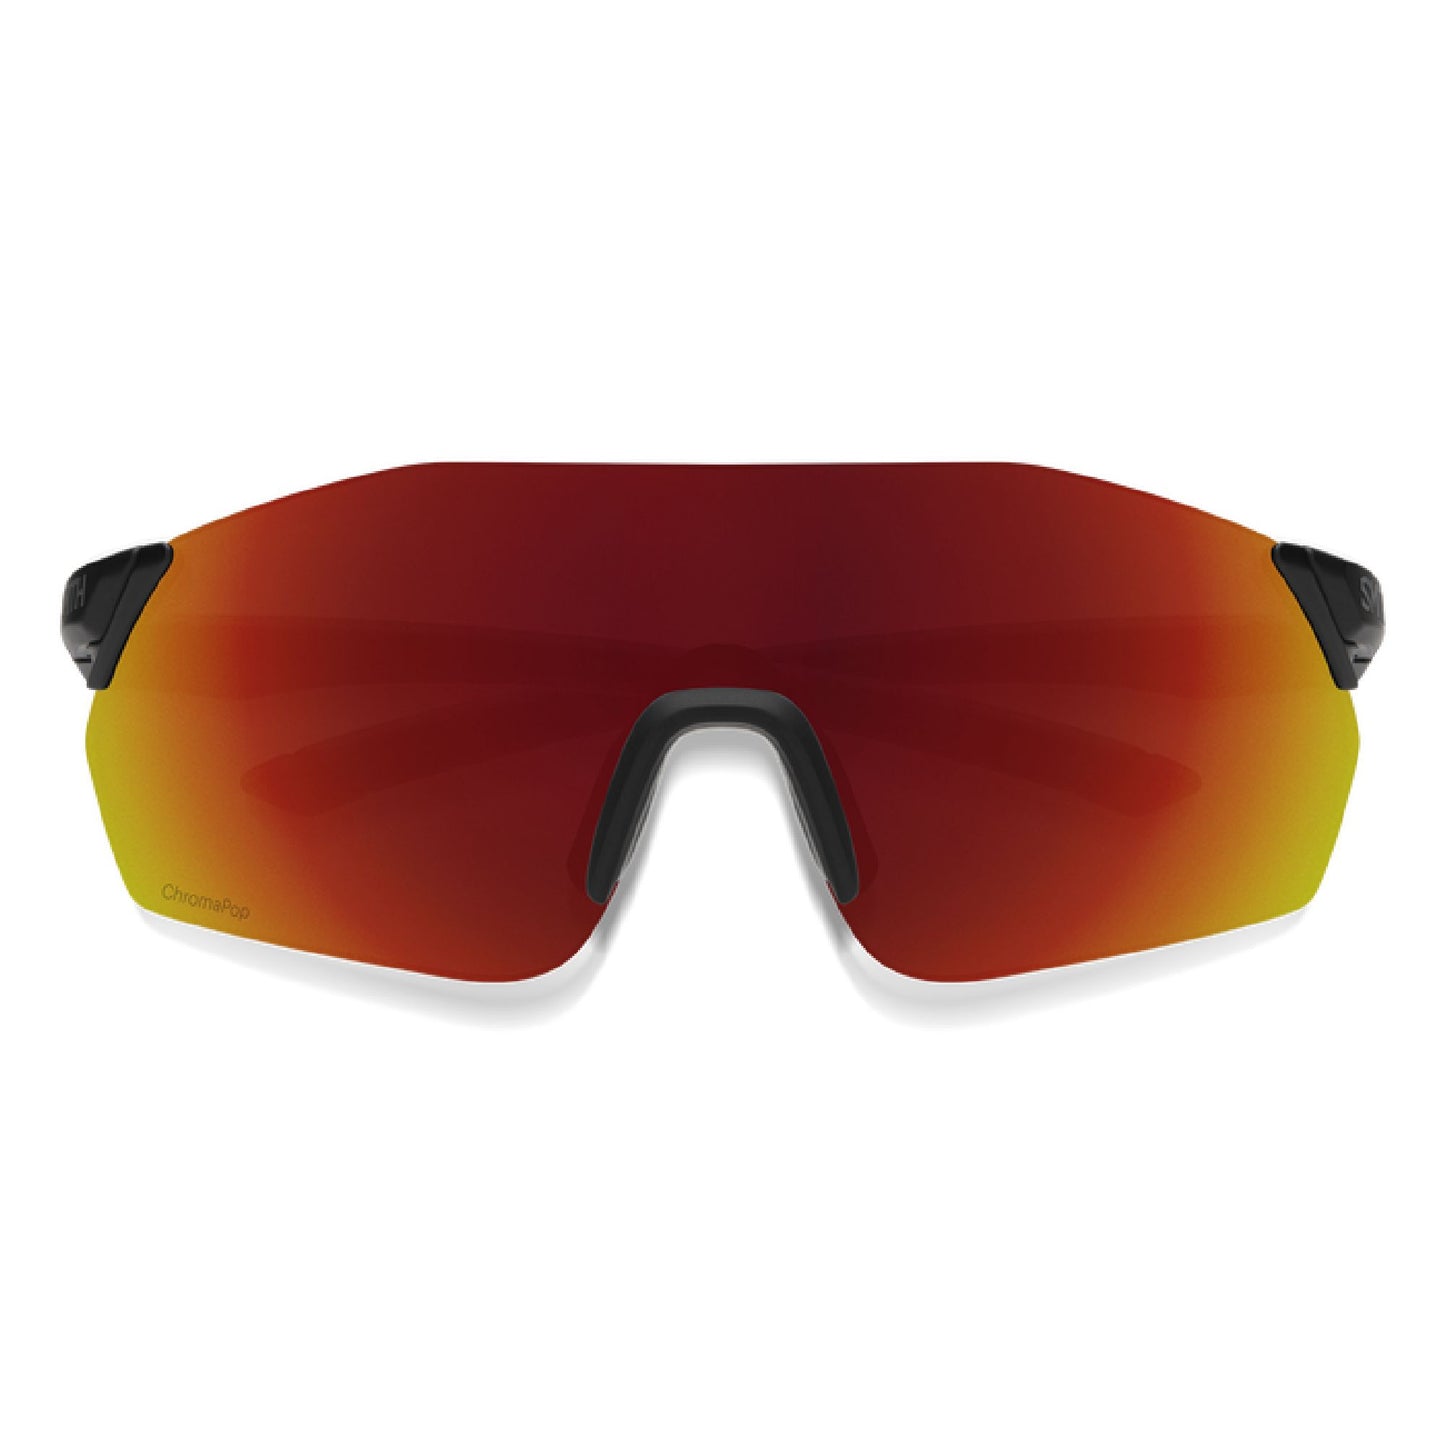 Smith Reverb Sunglasses Matte Black ChromaPop Red Mirror Sunglasses